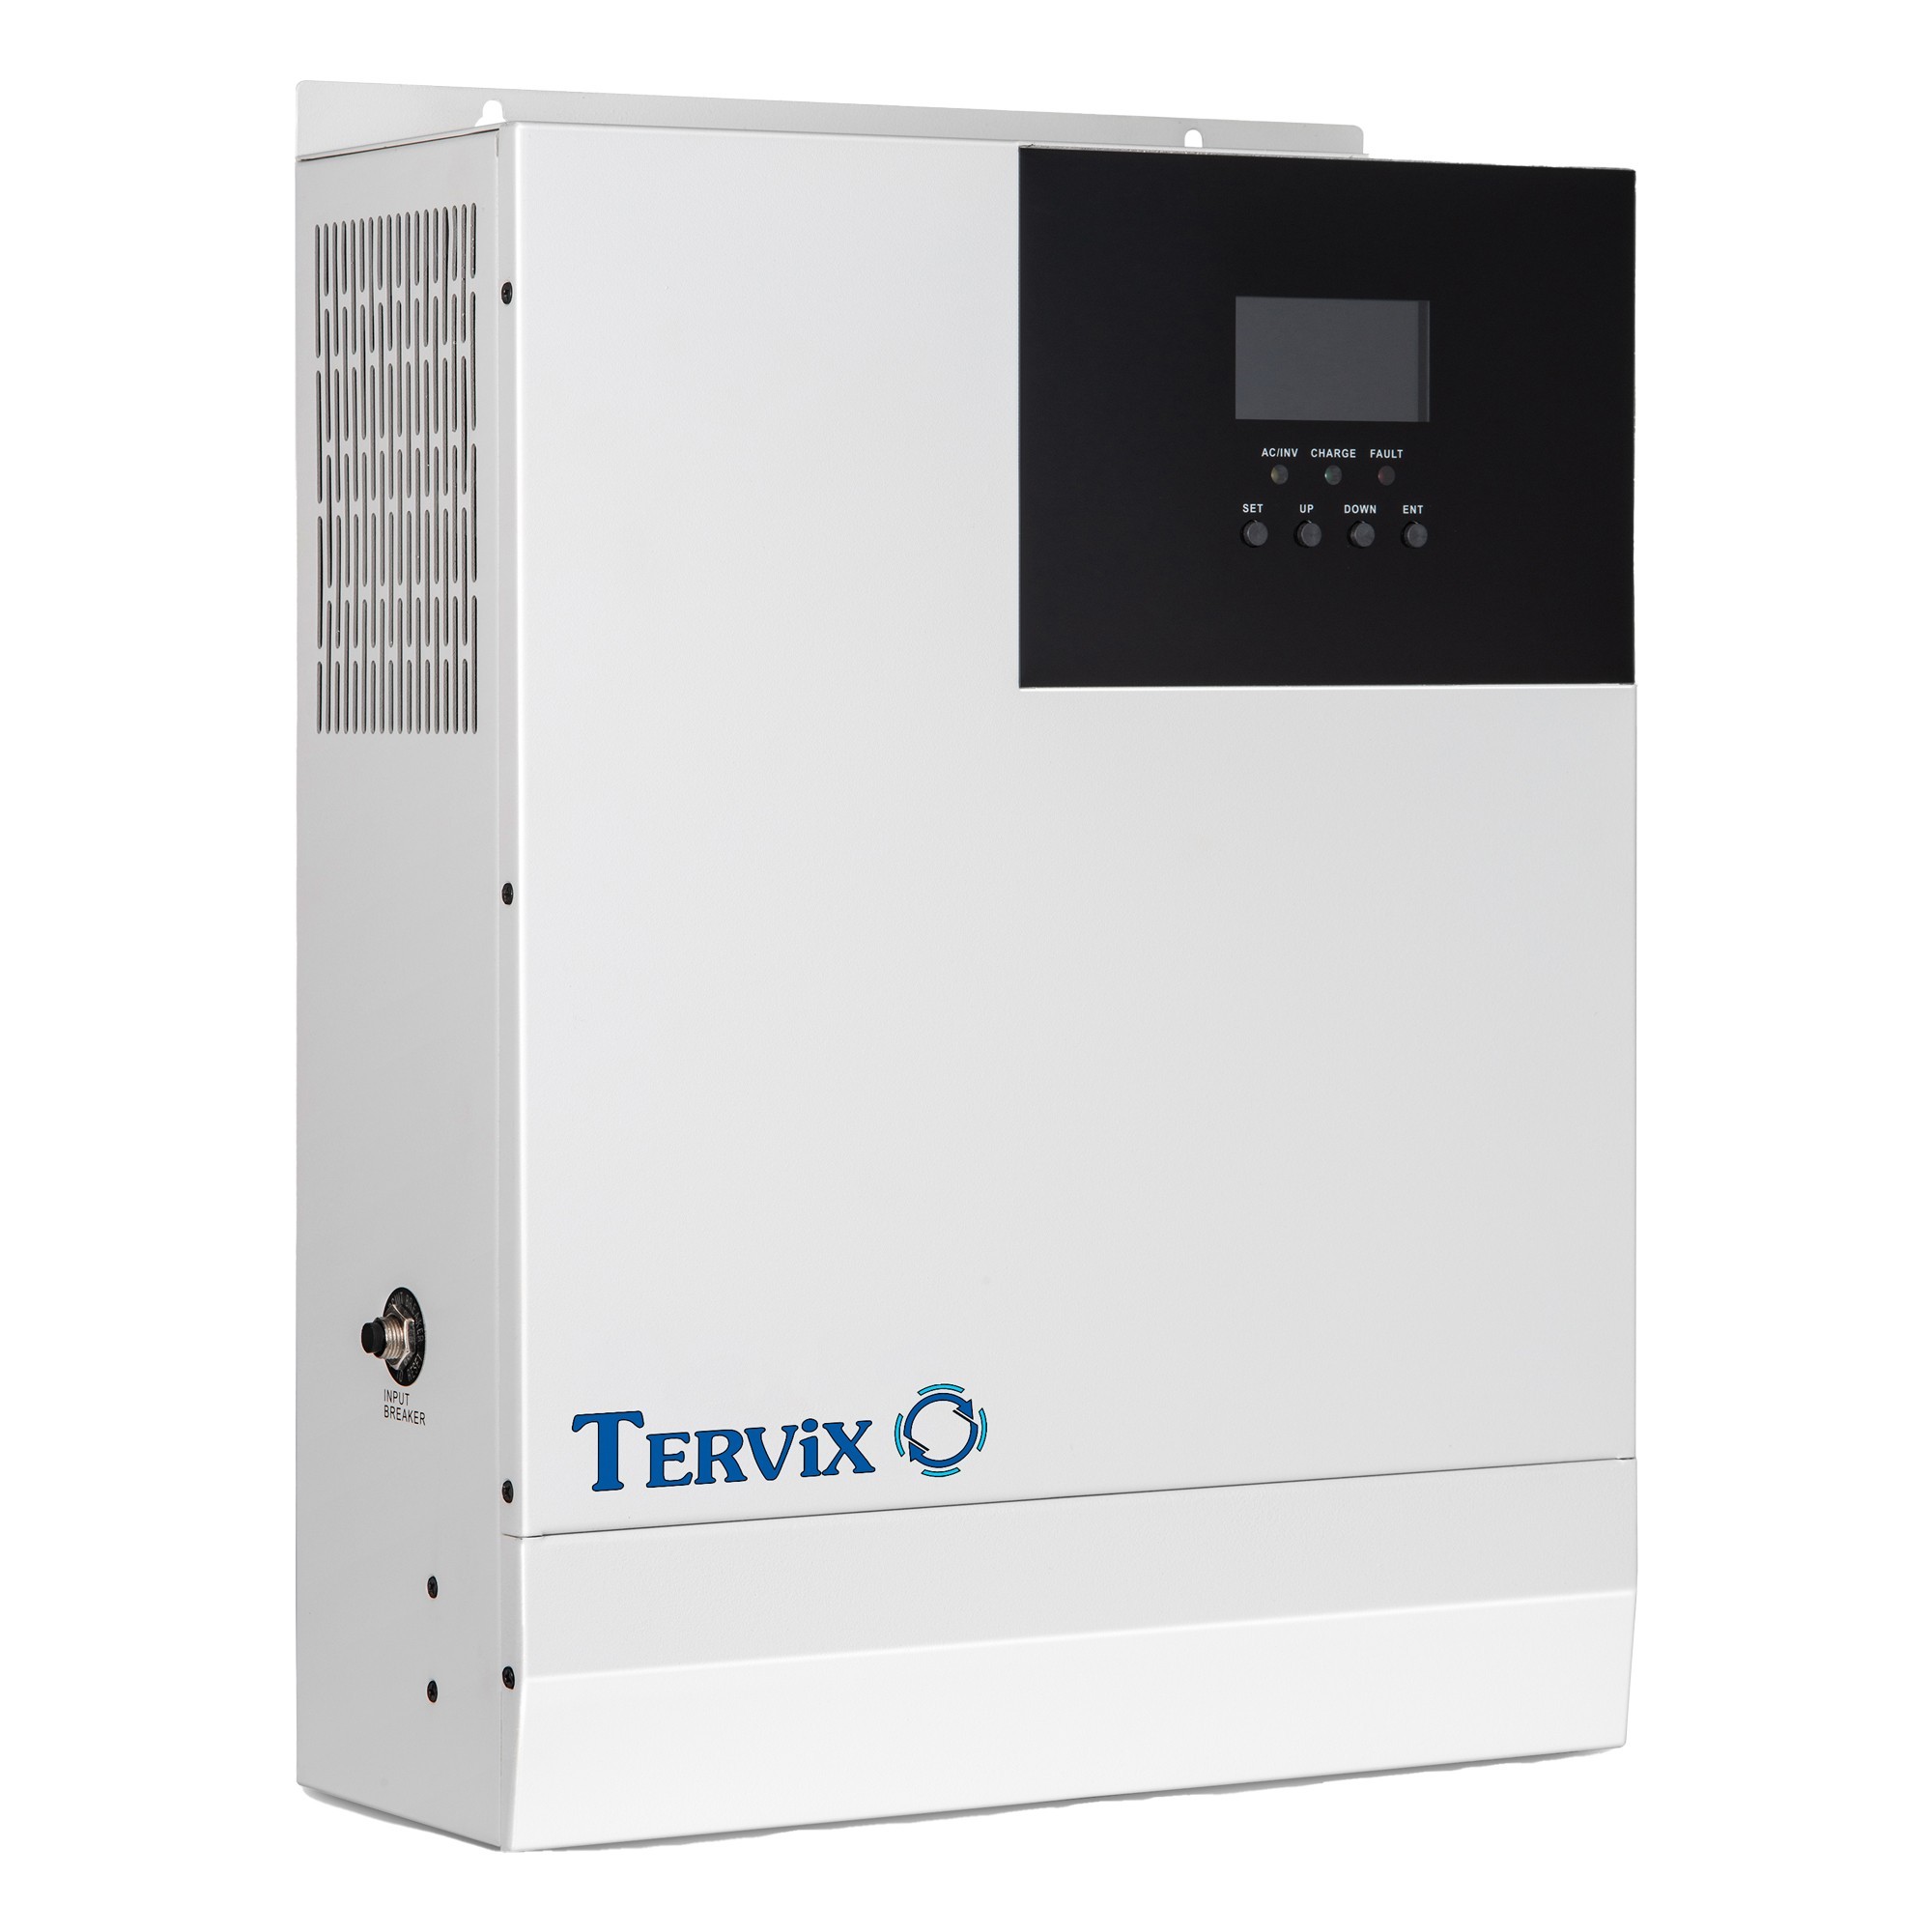 Система автономного питания Tervix BANKA 4,8 кВтч - инвертор 5кВ + аккумулятор 48В 100 Ач, 693210 цена 137700.00 грн - фотография 2